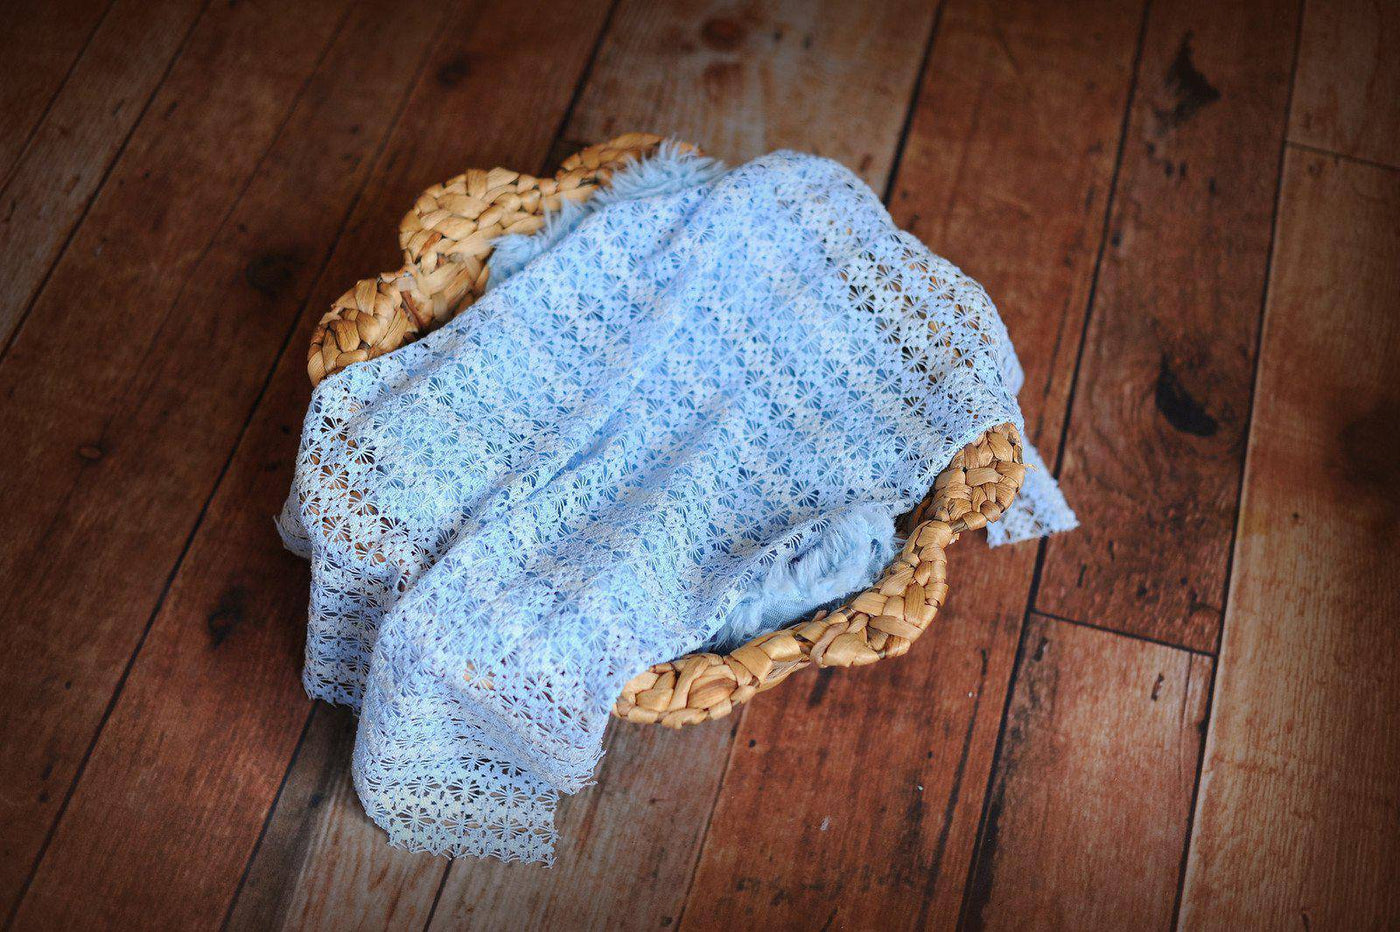 Baby Blue Fabric Fishnet Lace Wrap - Beautiful Photo Props